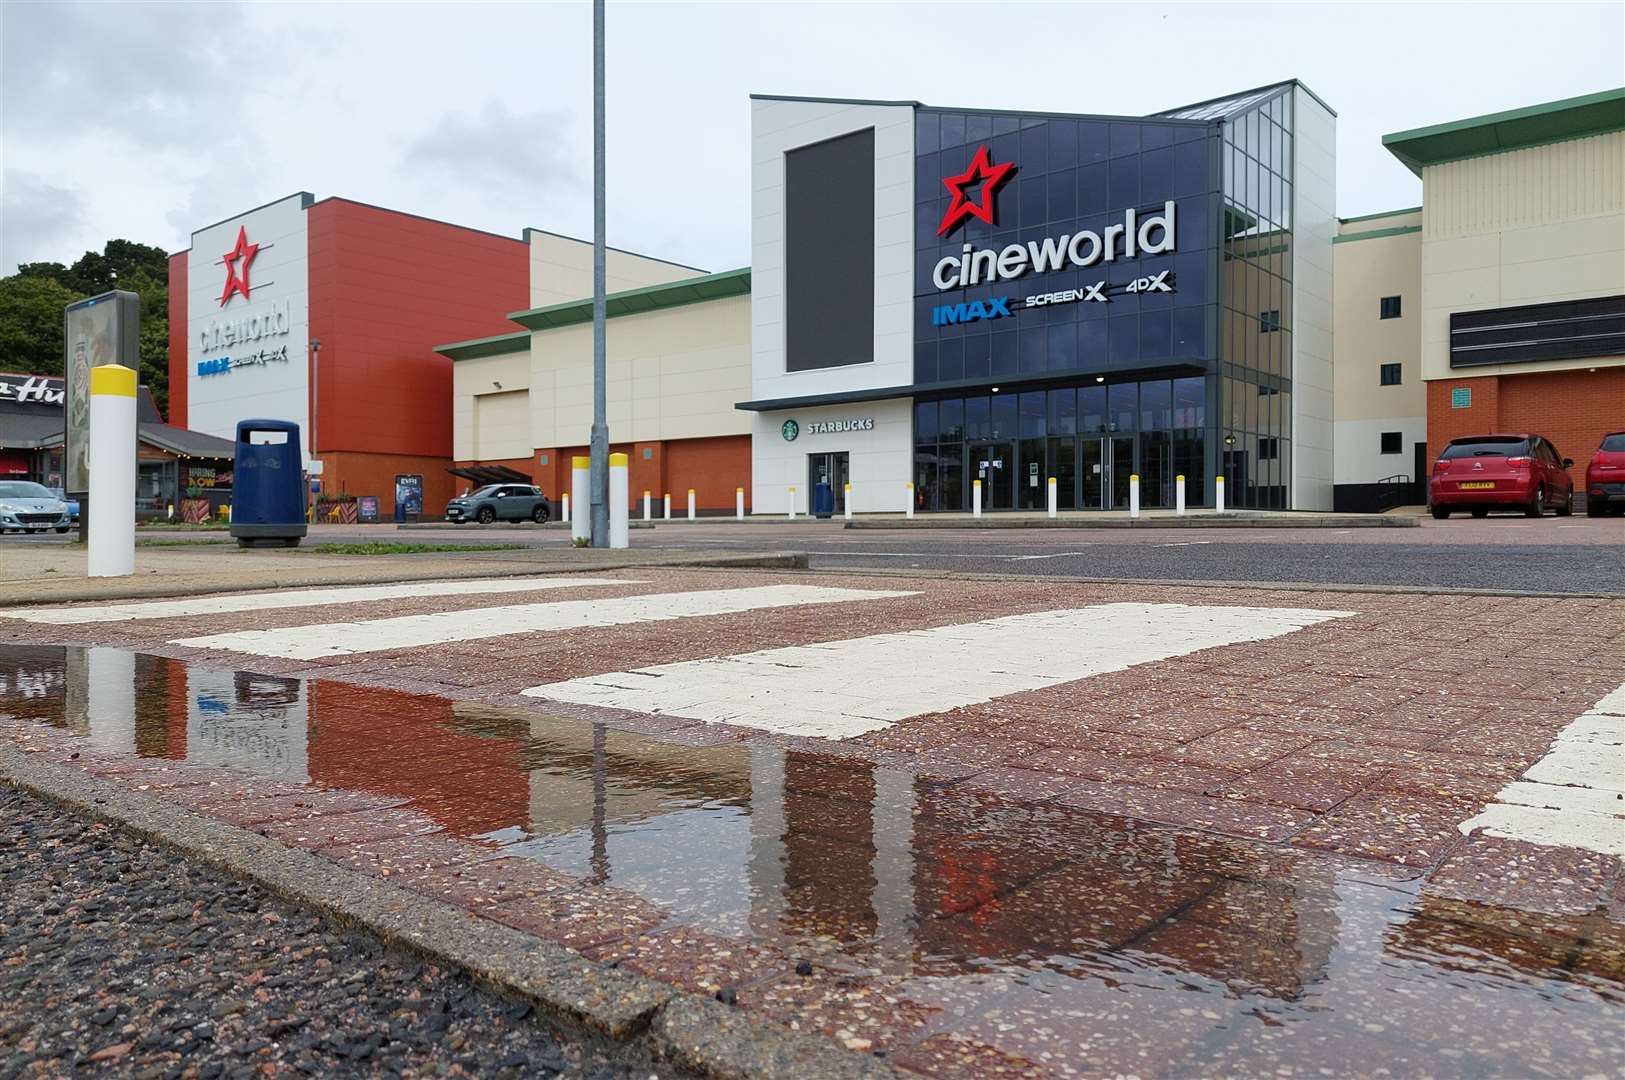 Ashford is also home to a Cineworld cinema